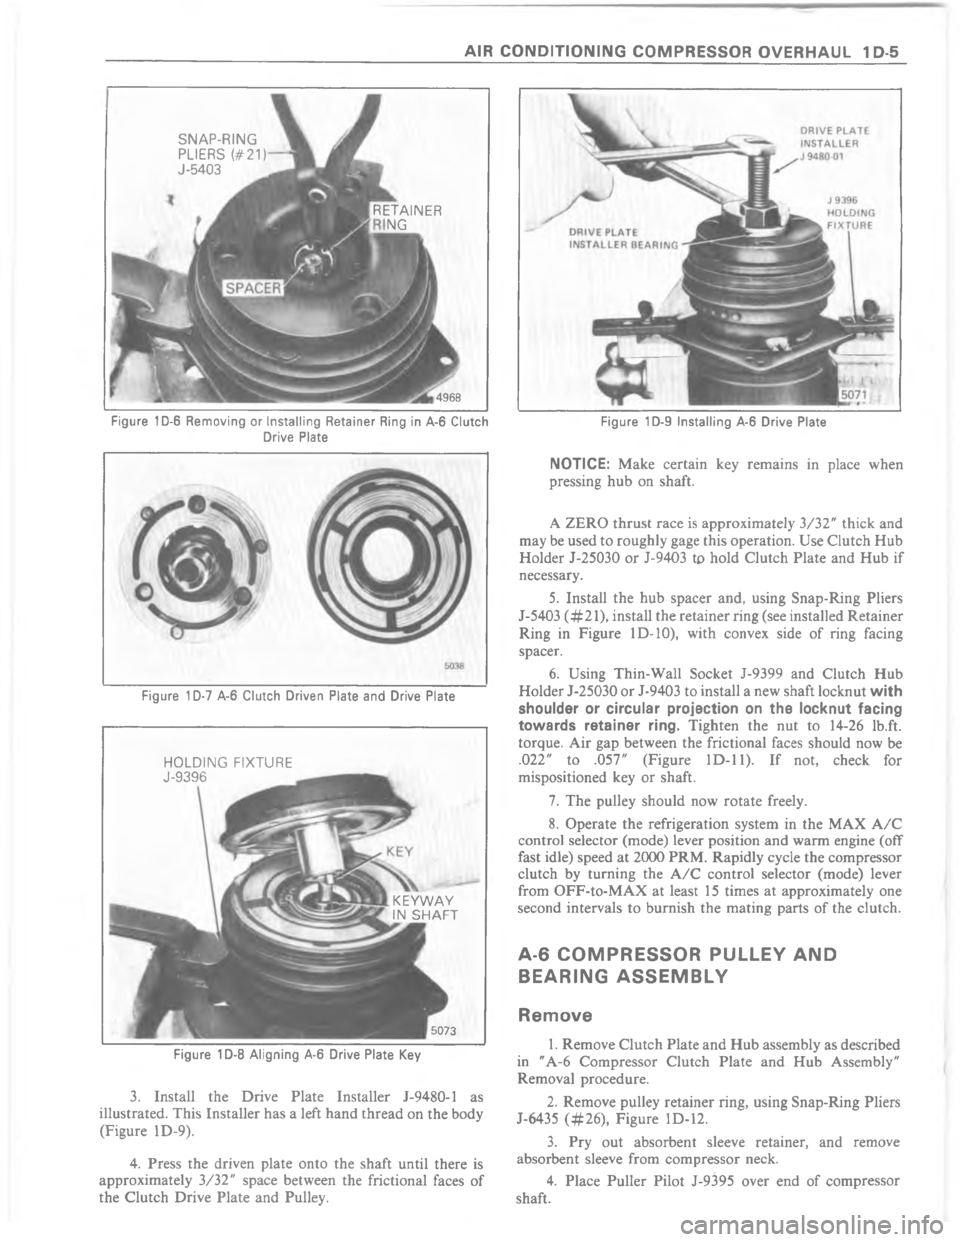 CHEVROLET LIGHT DUTY TRUCK 1980  Repair Everhaul Manual Downloaded from www.Manualslib.com manuals search engine  	    @        

L



!$7\)
/$1
!$7
!$7
A
	
?
>

!$7
+

&

0

:
F
\)
